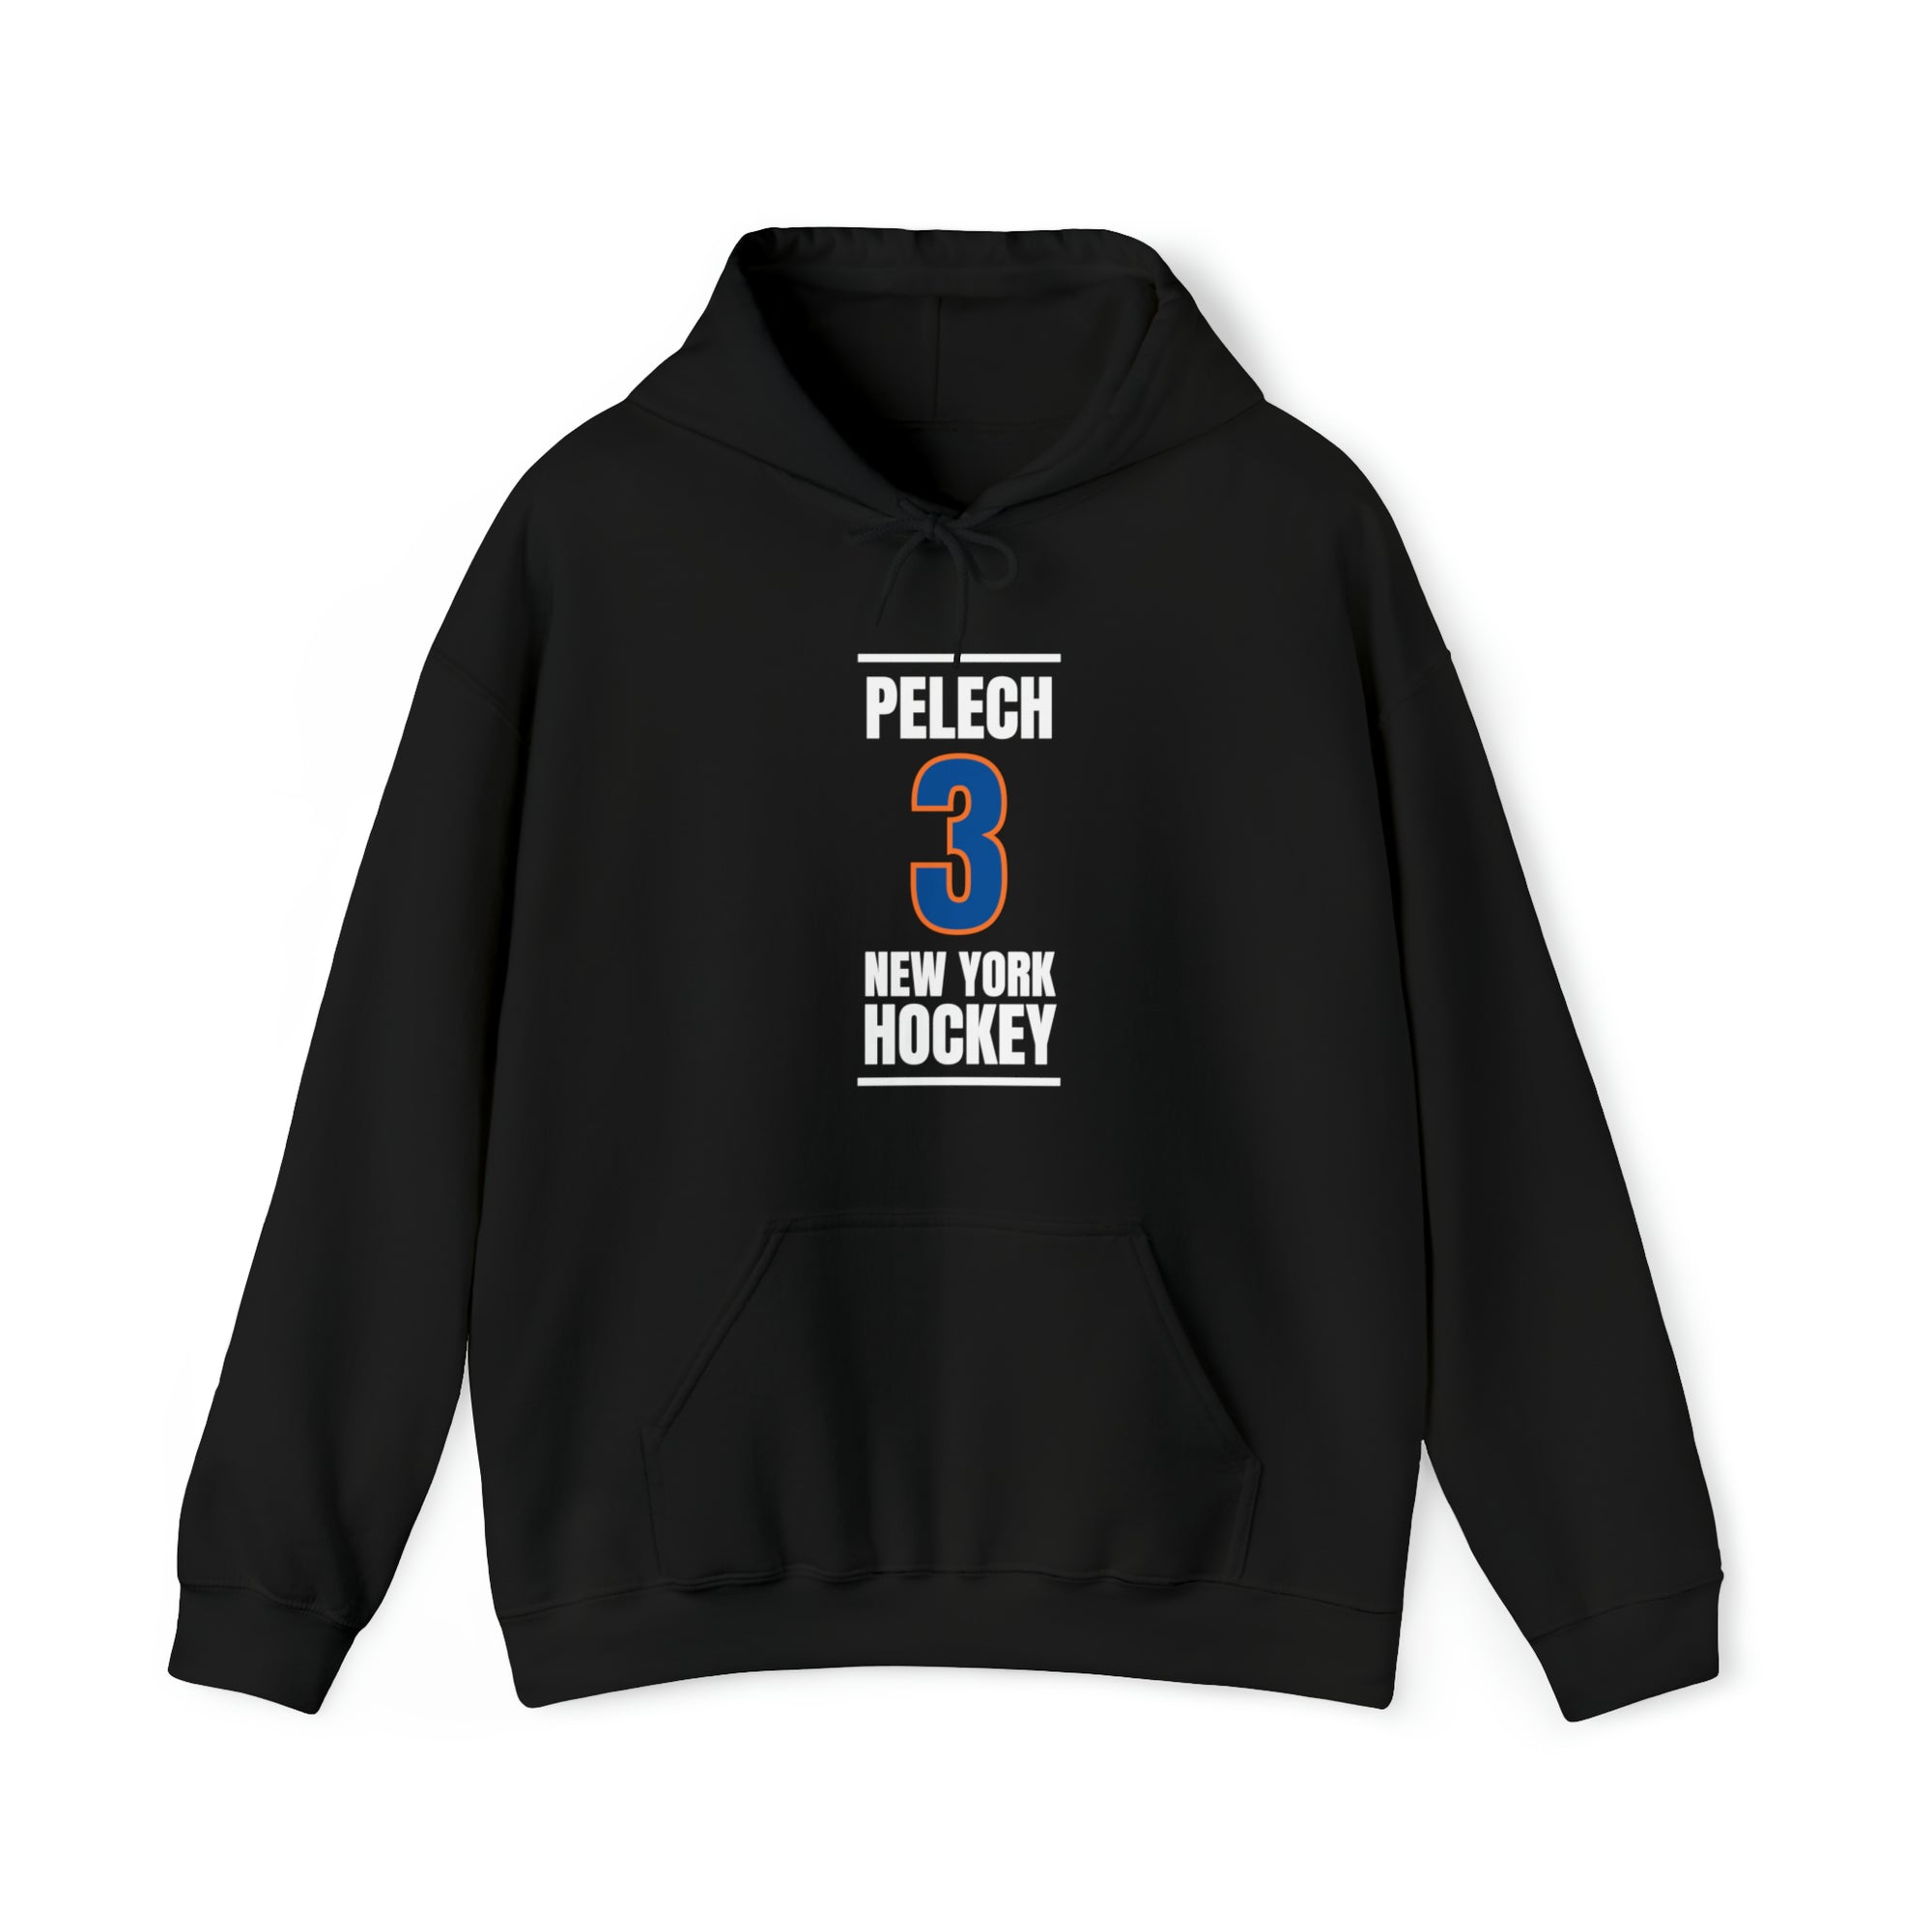 Pelech 3 New York Hockey Blue Vertical Design Unisex Hooded Sweatshirt